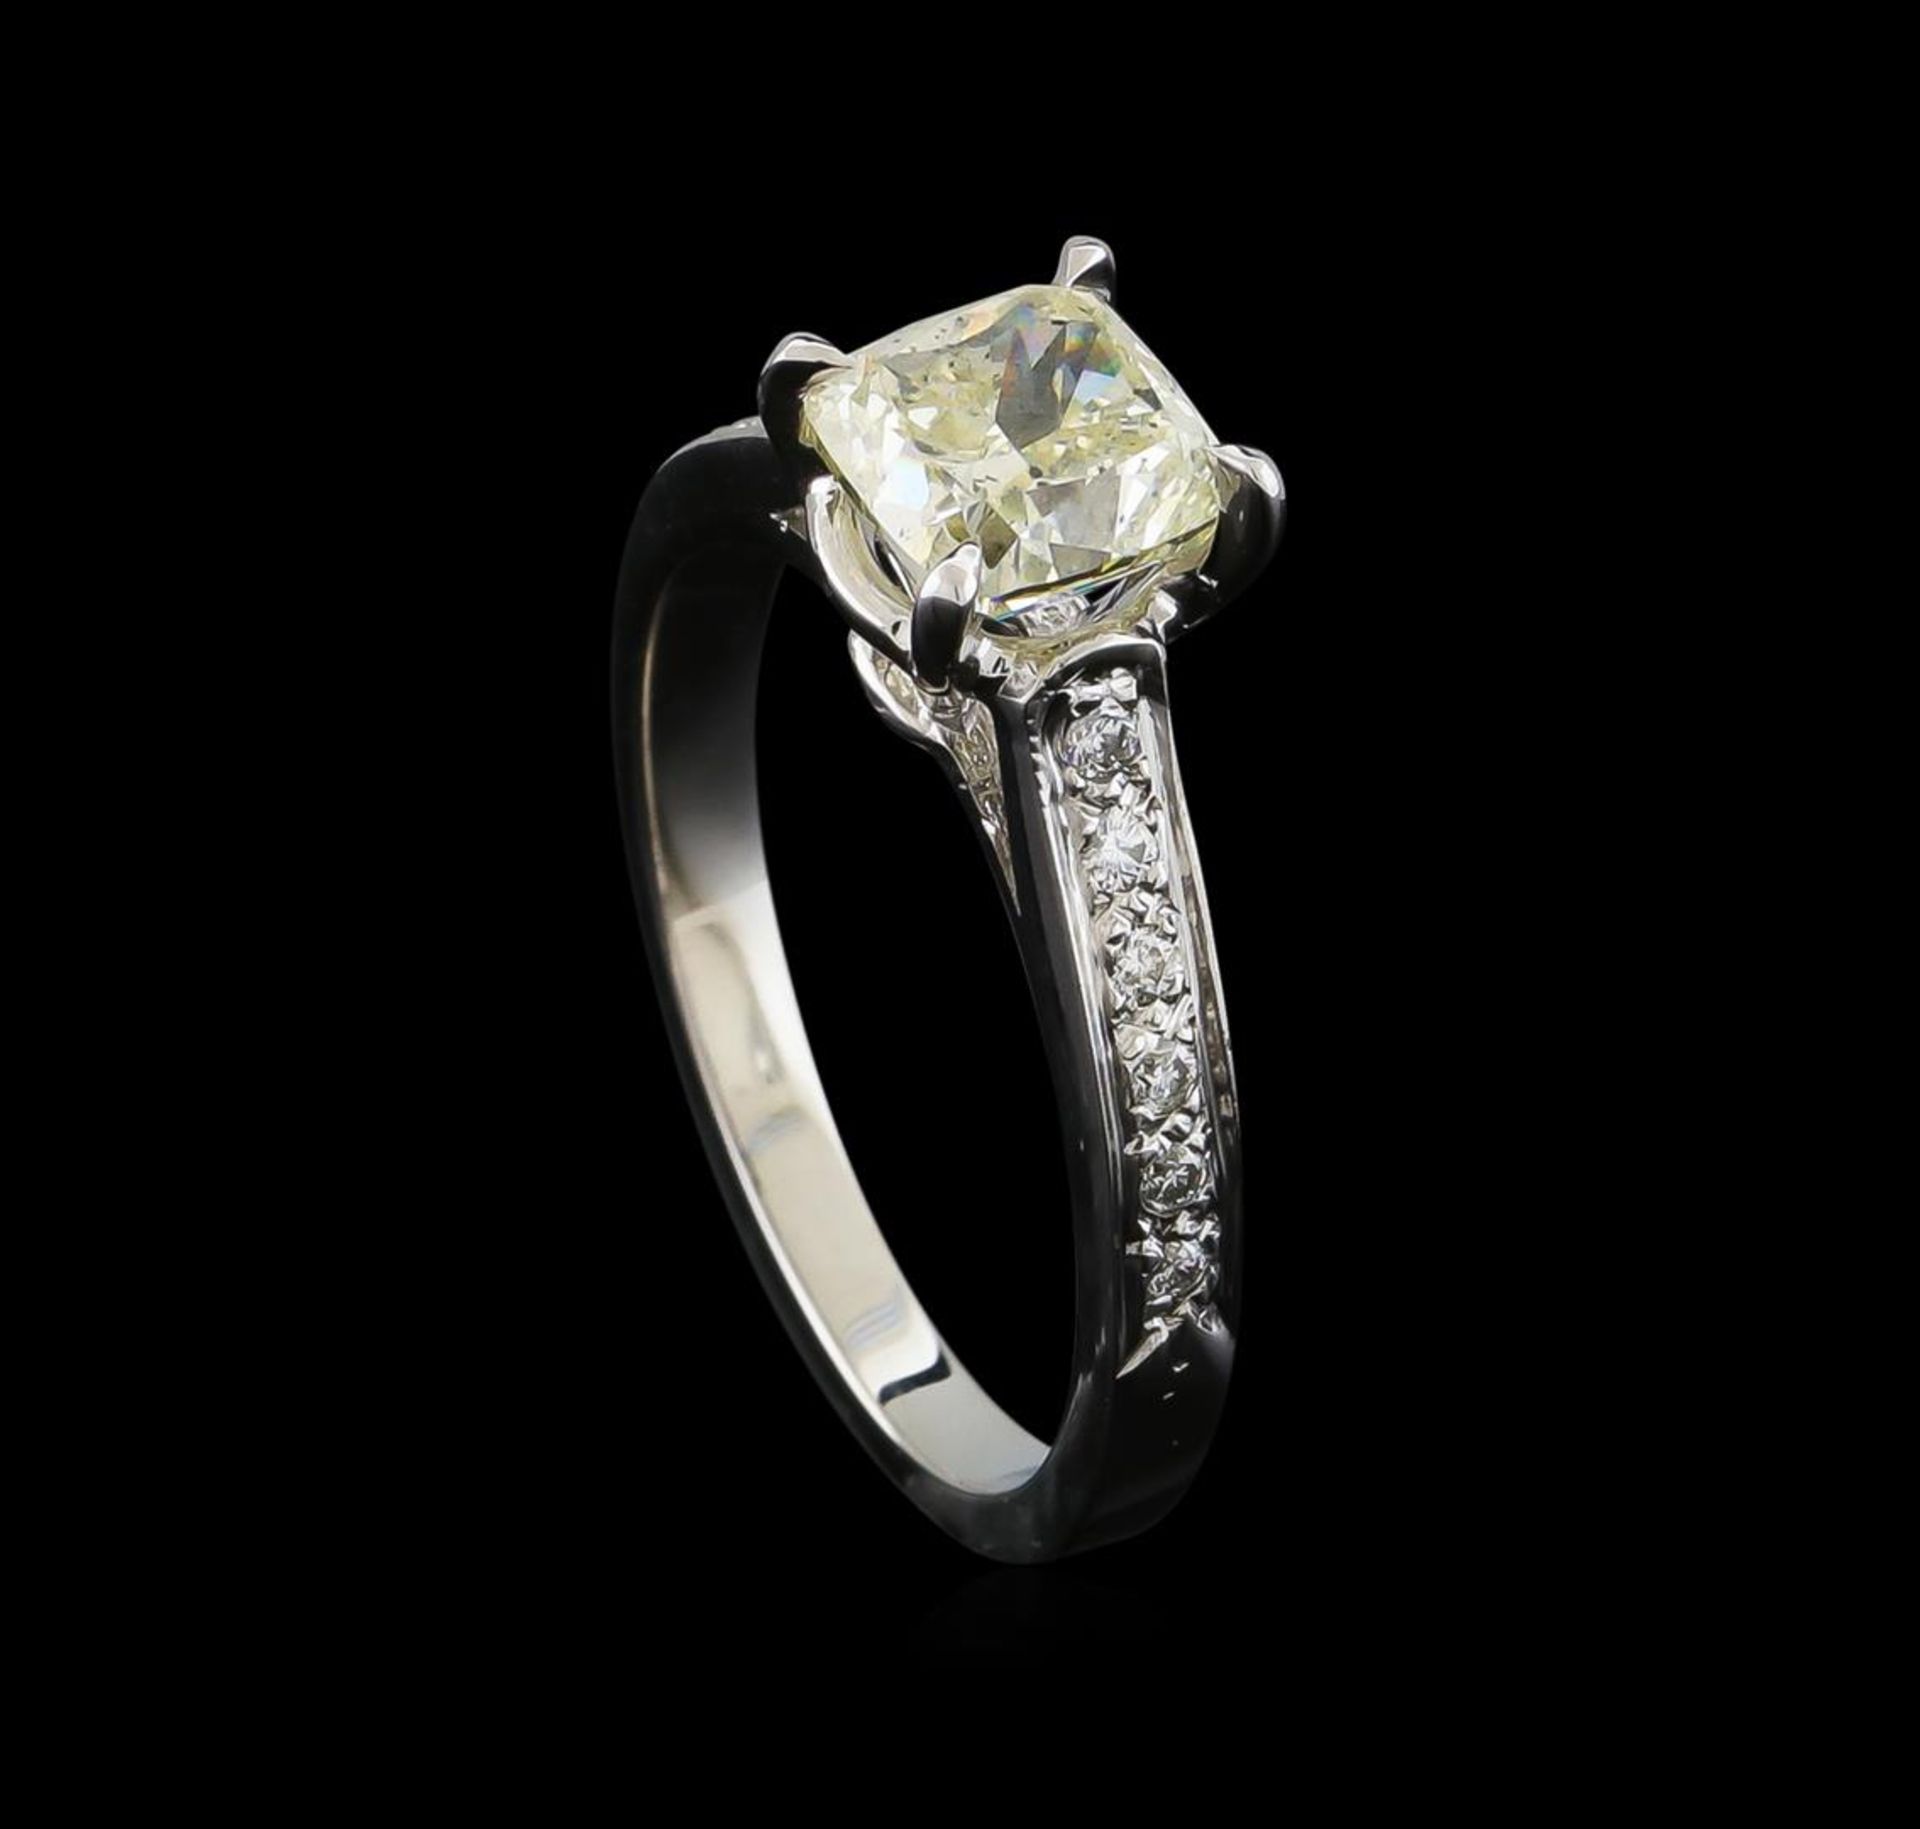 1.77 ctw Diamond Ring - 14KT White Gold - Image 4 of 5